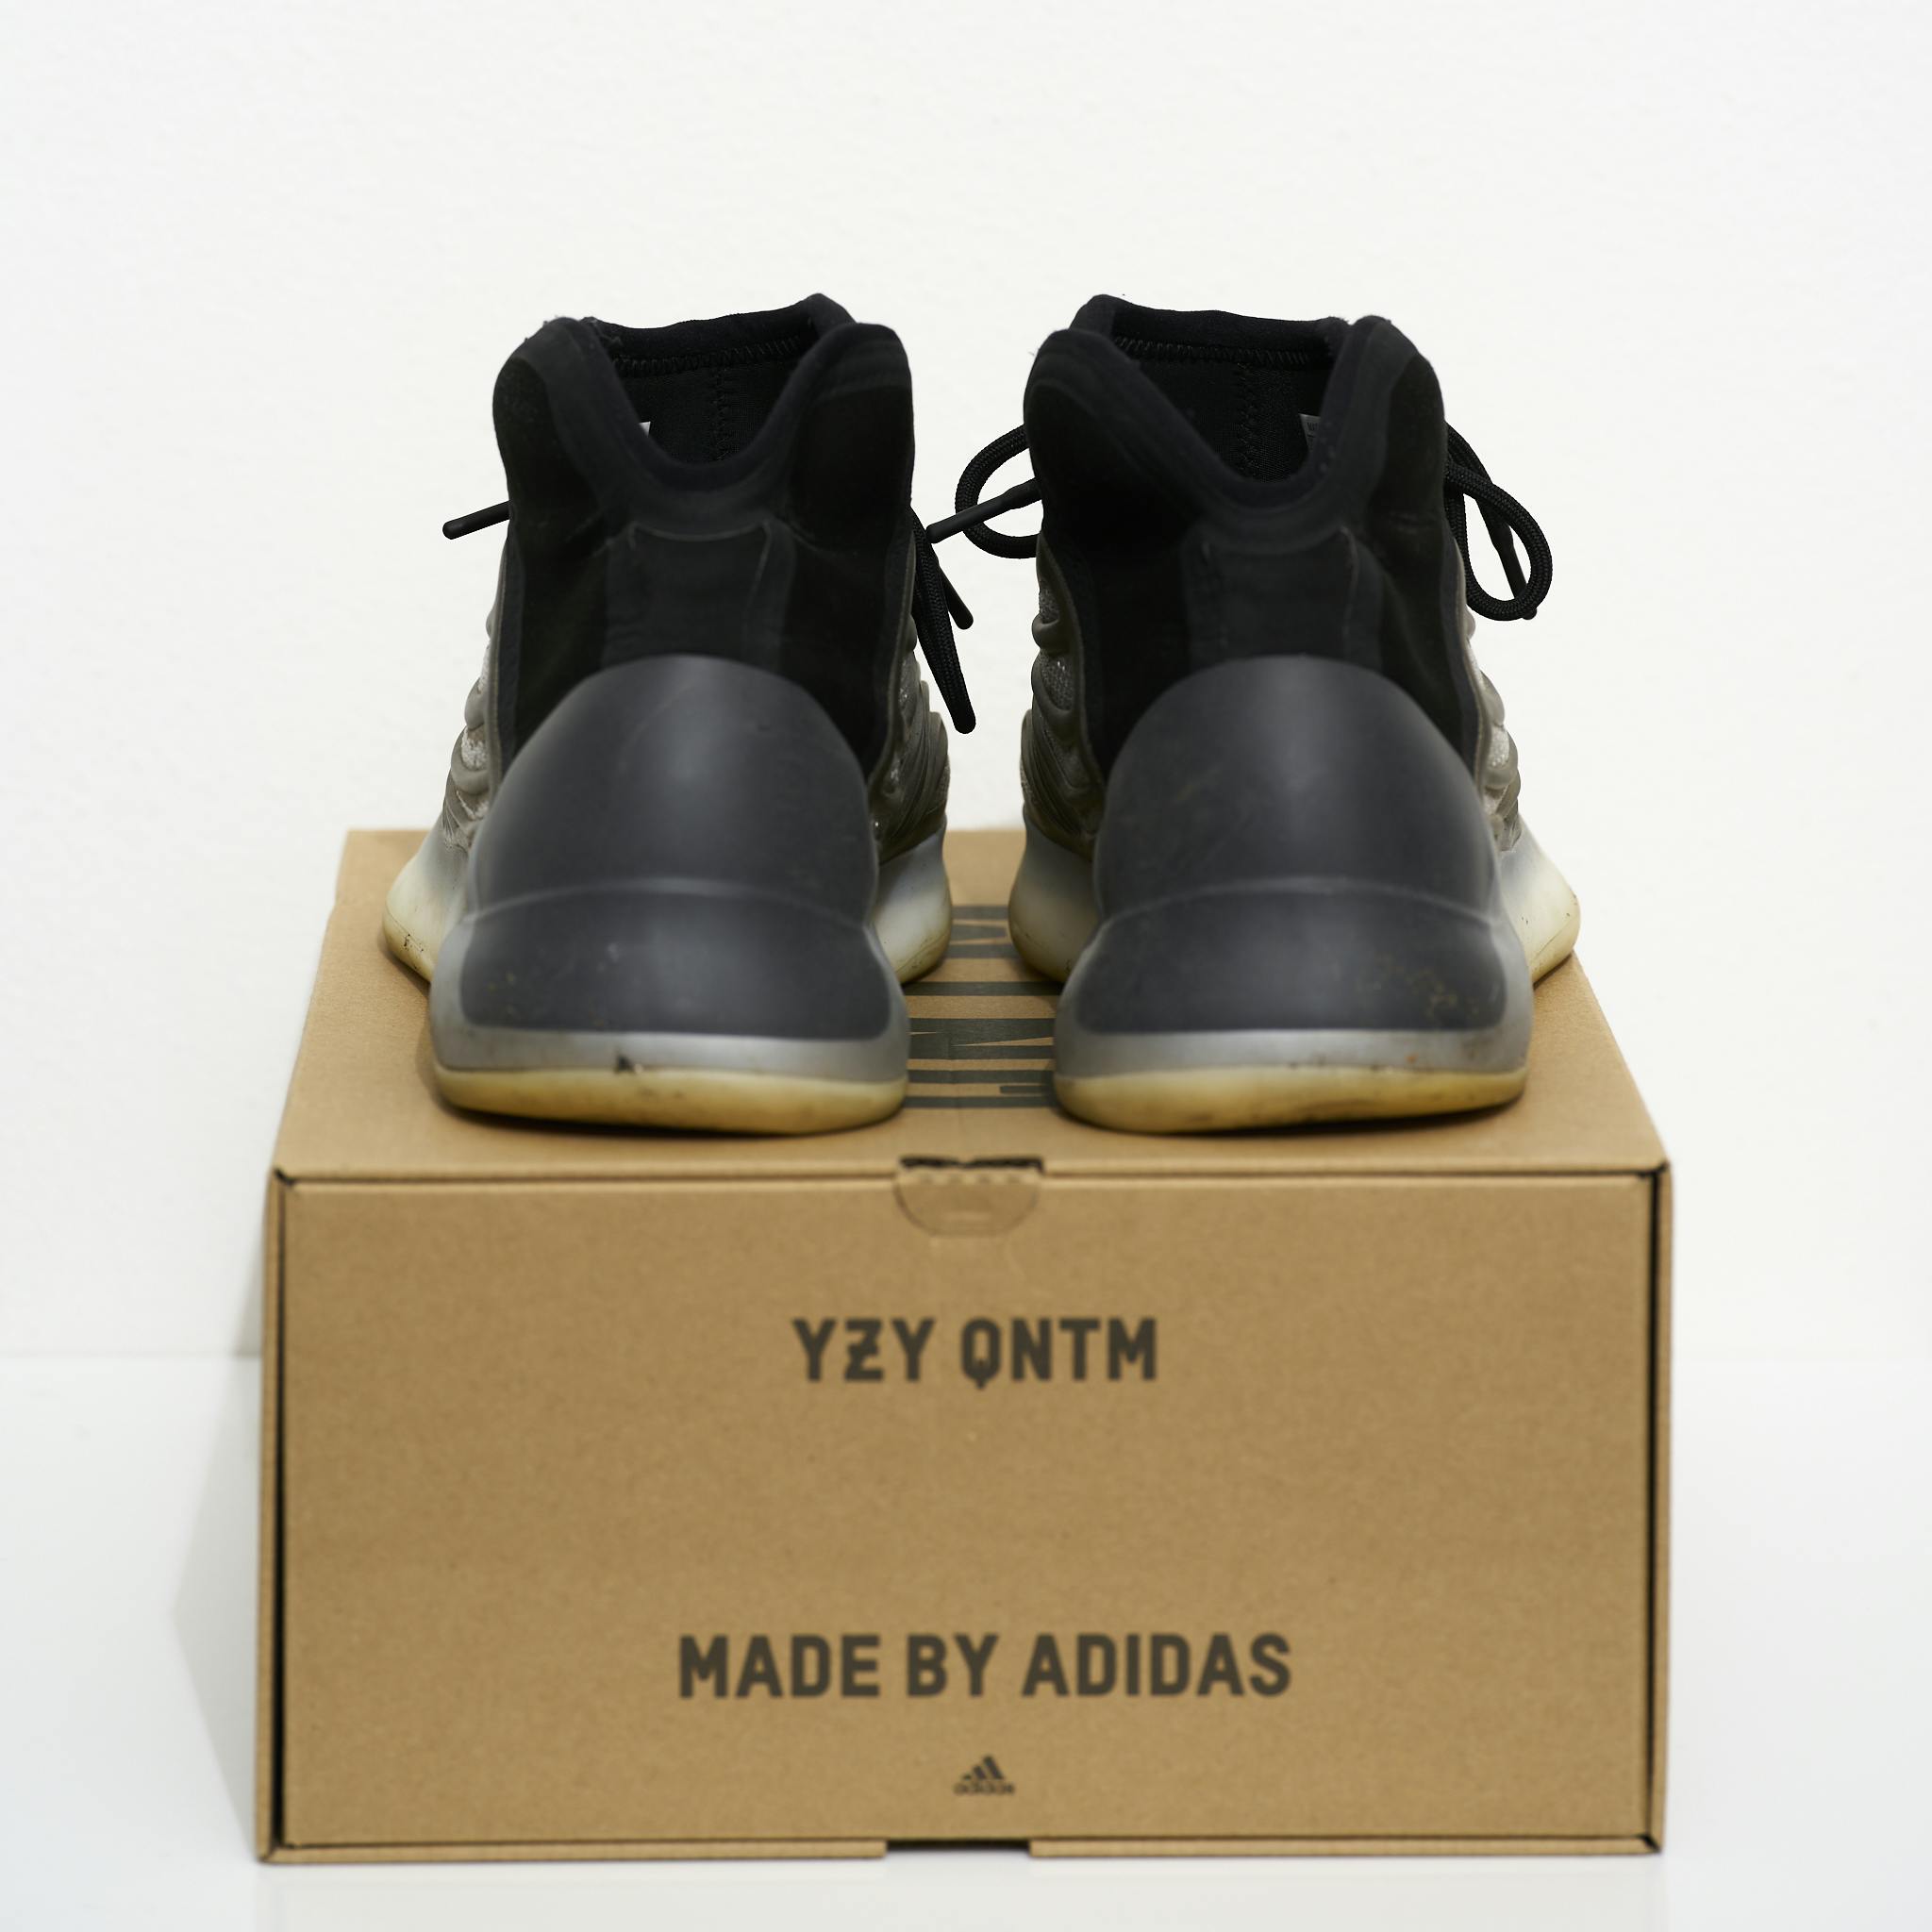 Adidas Yeezy QNTM Lifestyle Size 11 - 2